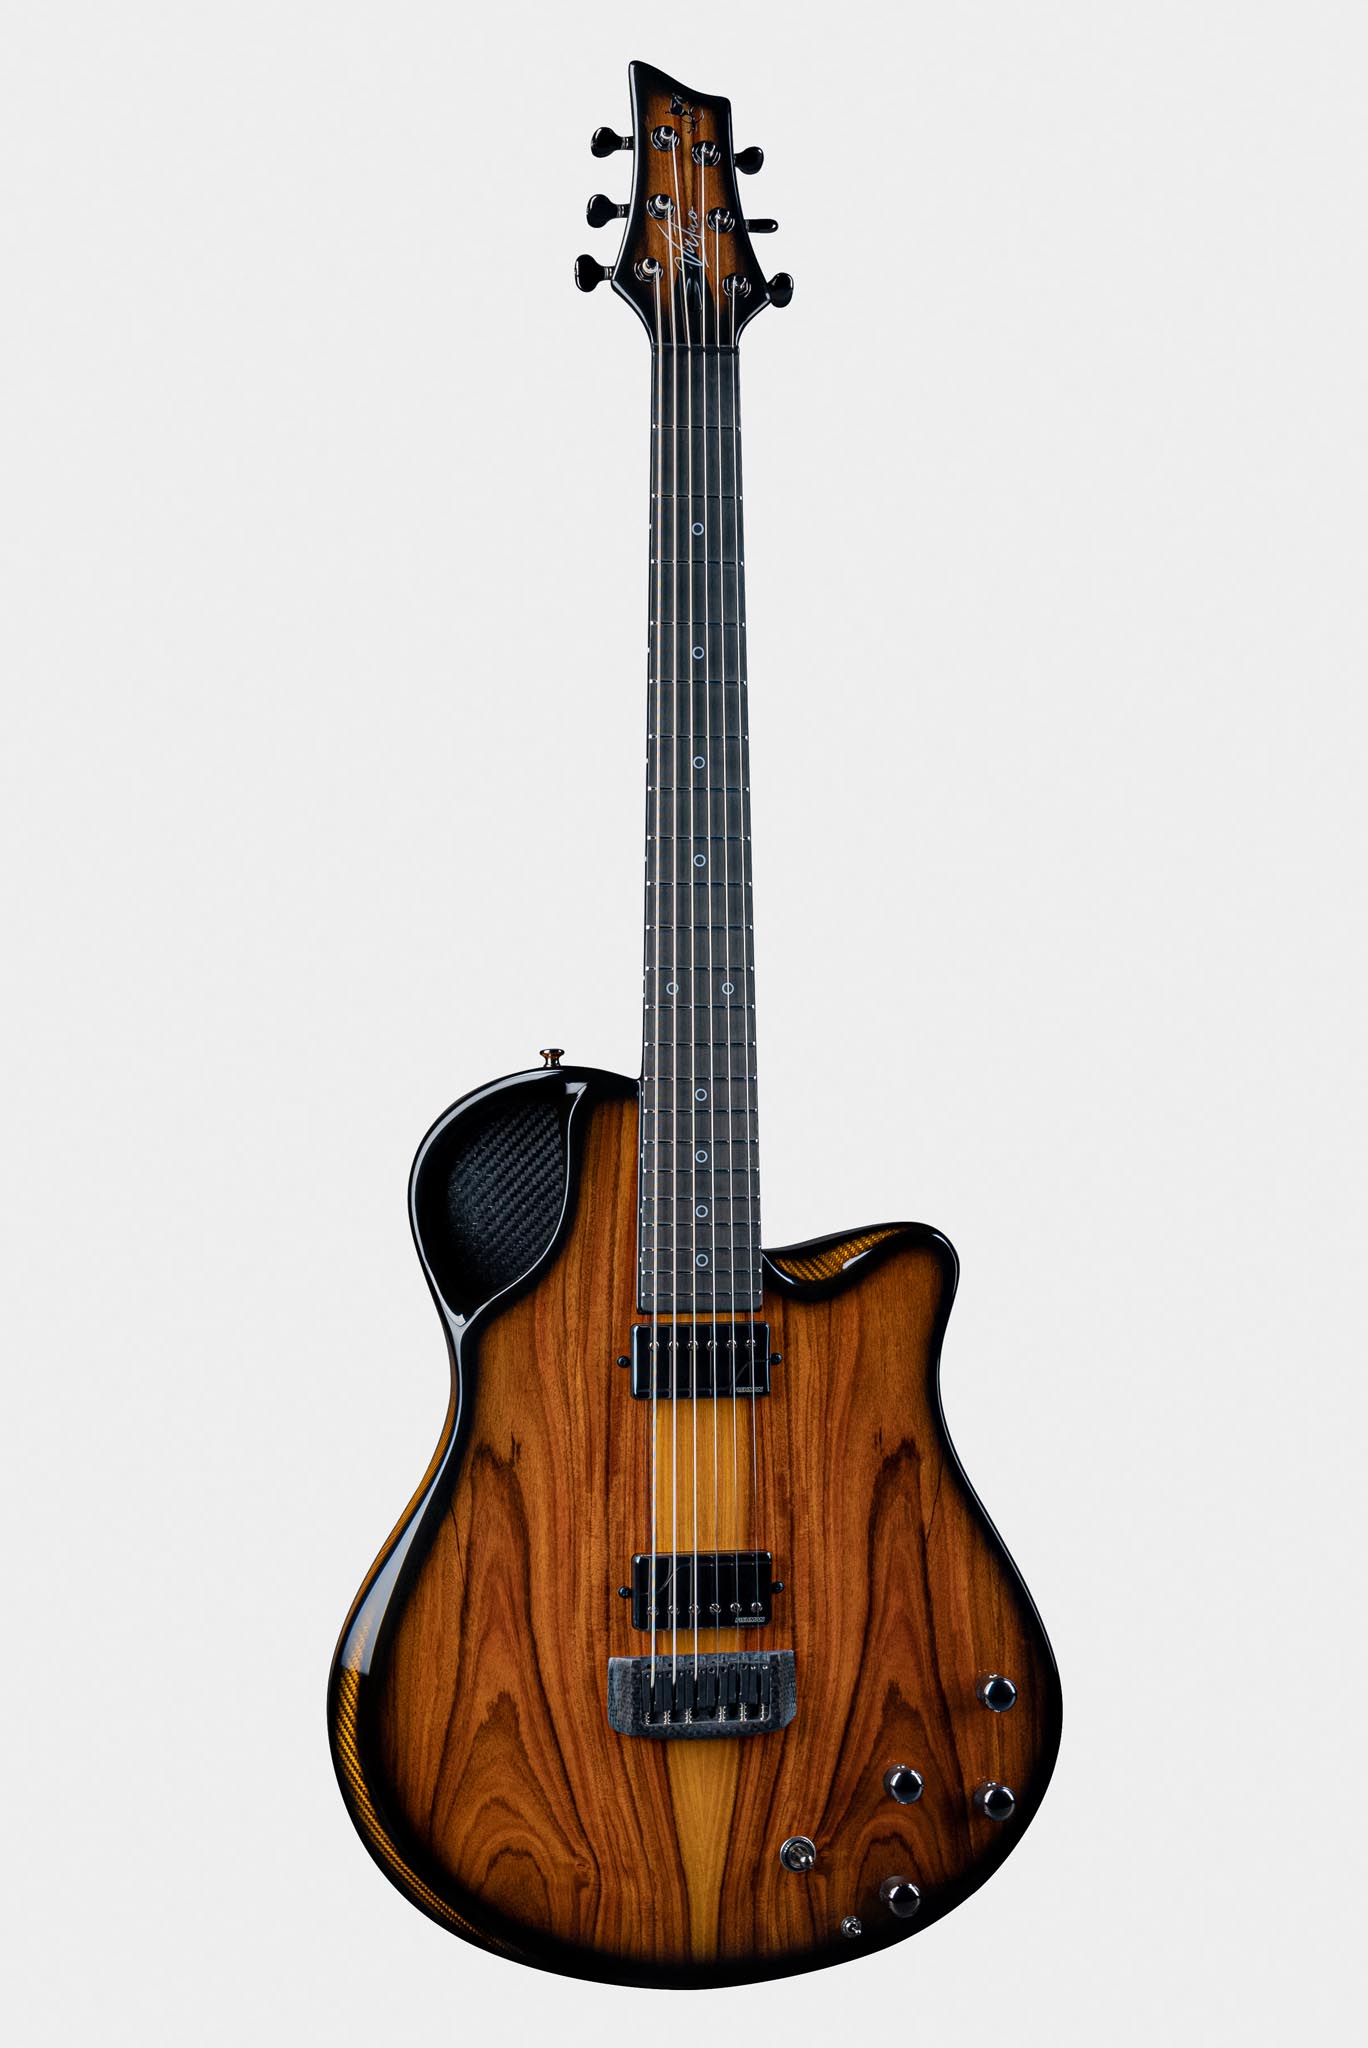 Walnut Wood Emerald Virtuo Guitar